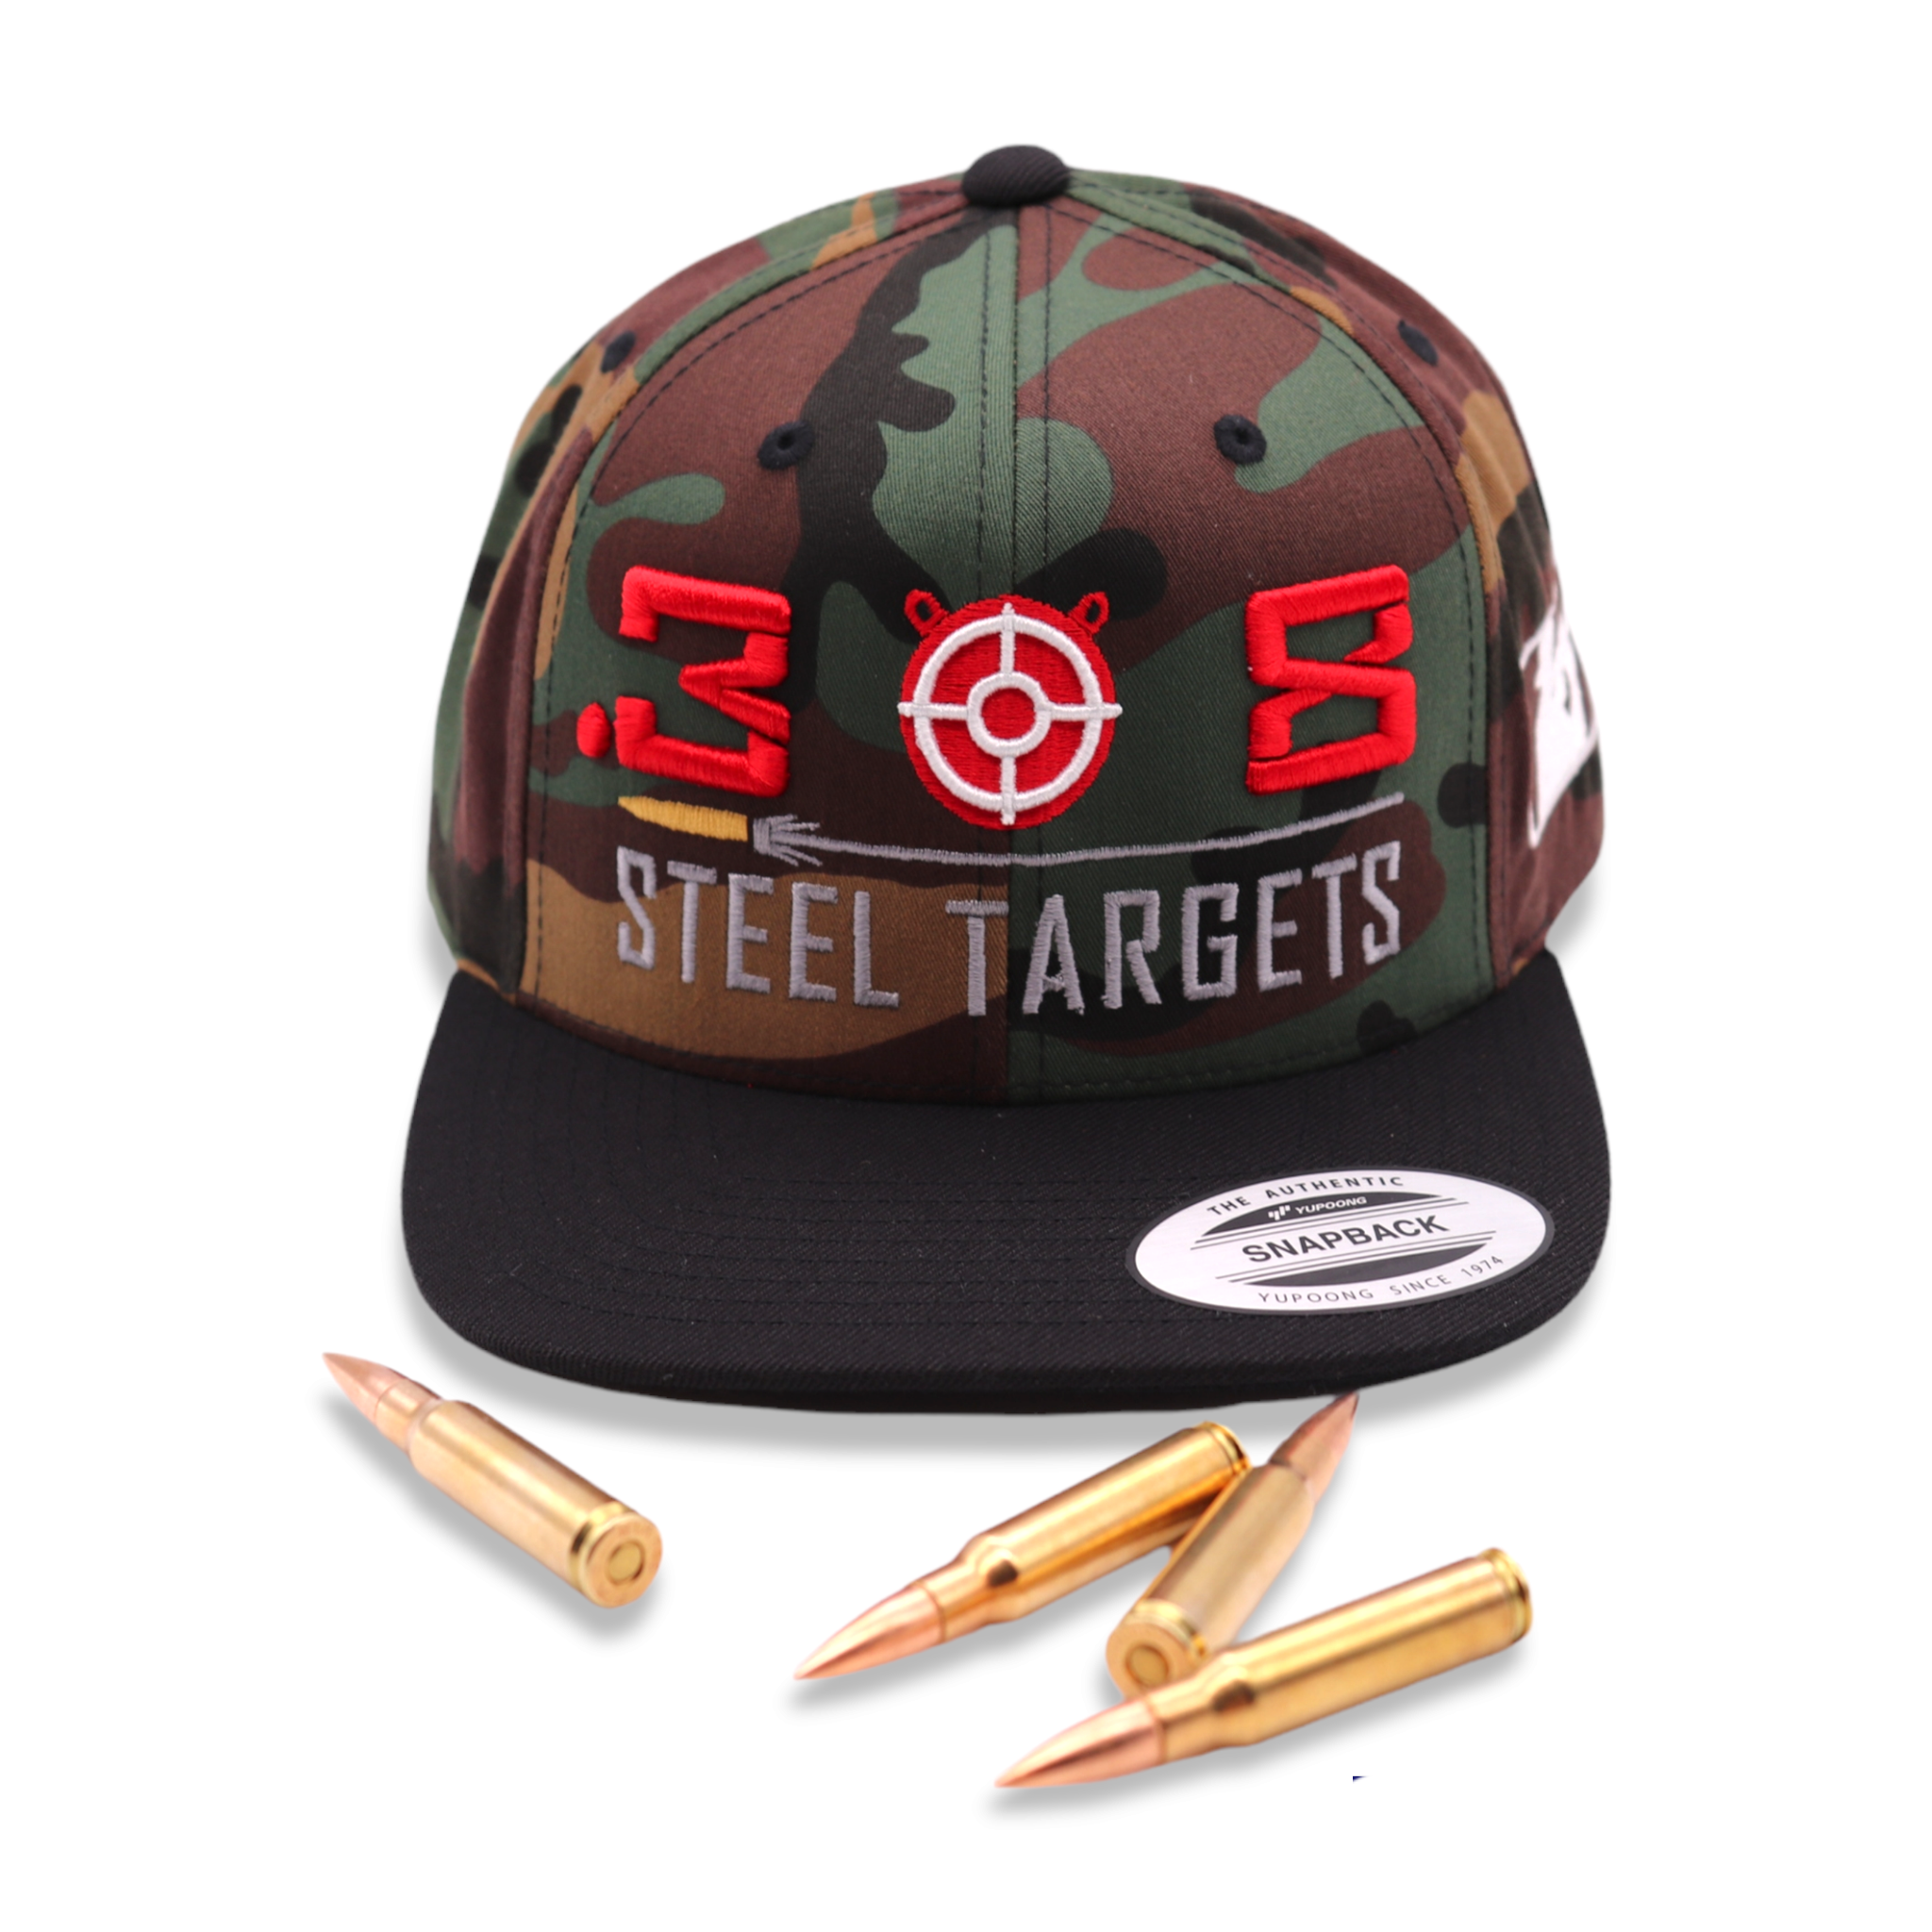 .308 Steel Targets Embroidered 3D Snapback Hat